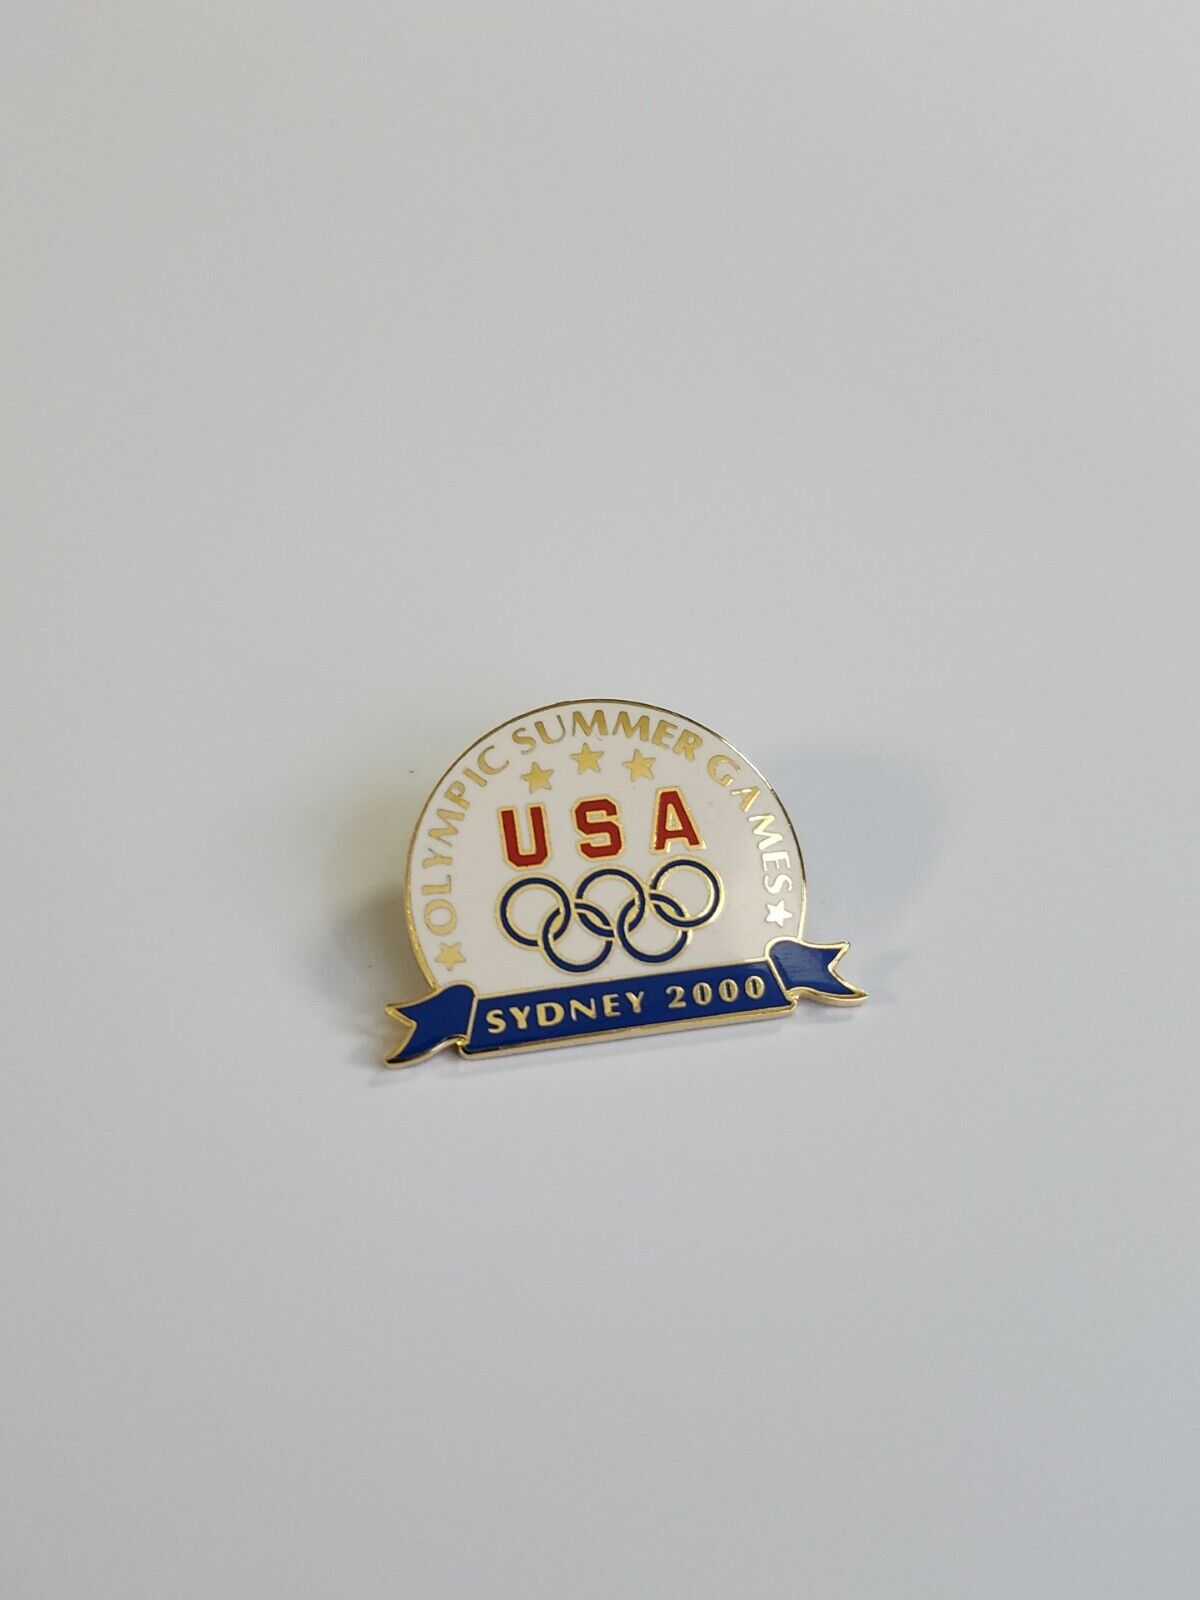 USA Sydney 2000 Olympic Summer Games Souvenir Pin Australia